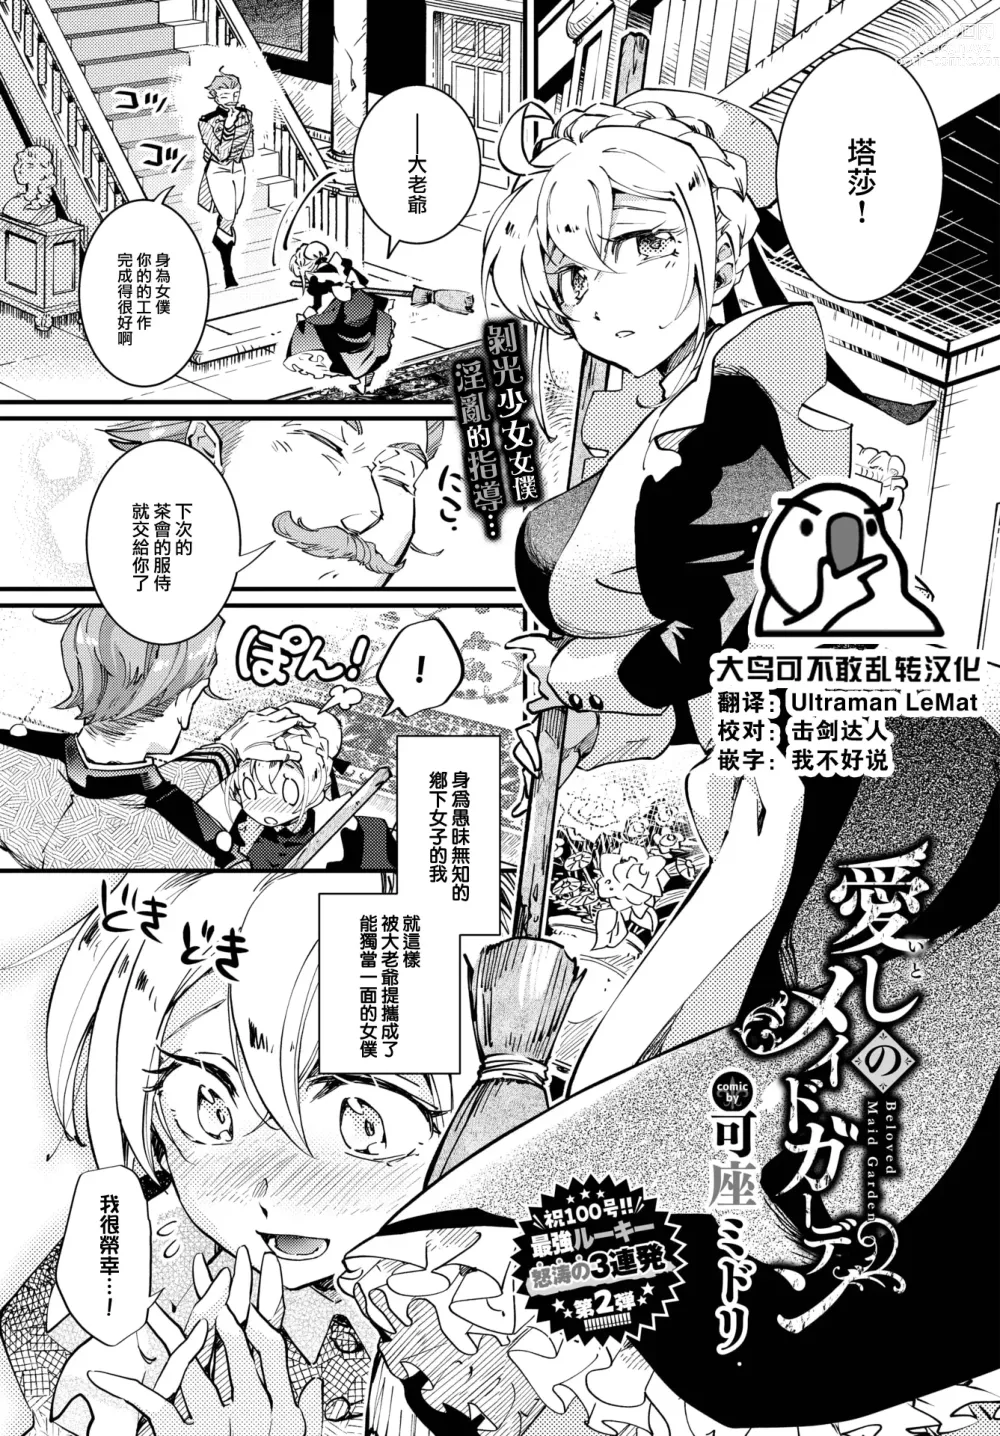 Page 1 of manga Beloved Maid Garden